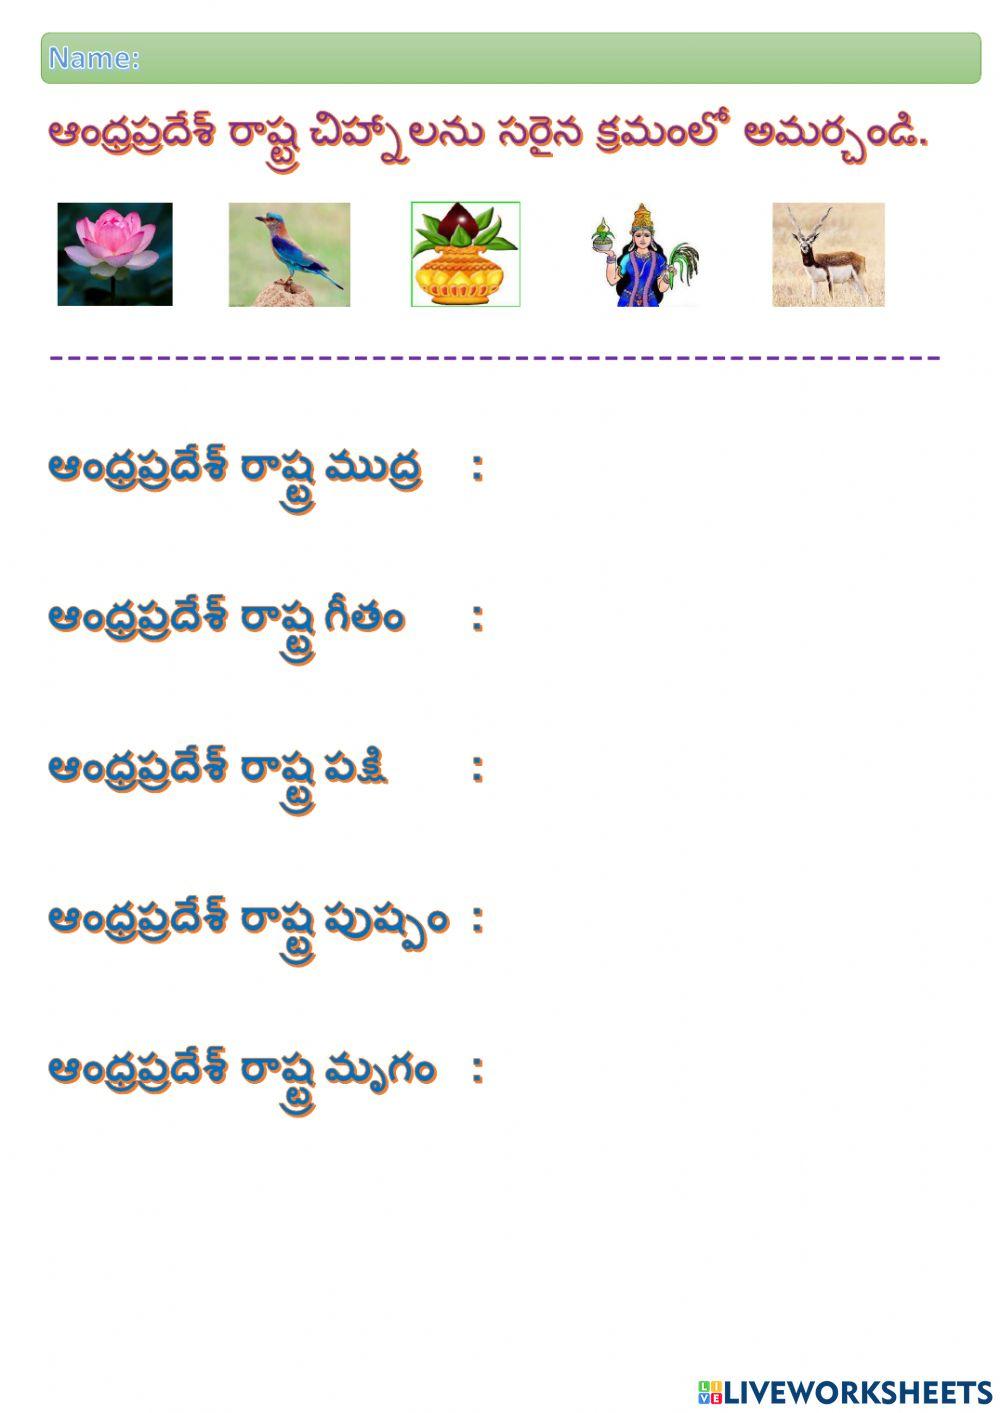 Andhra pradesh Official symbols